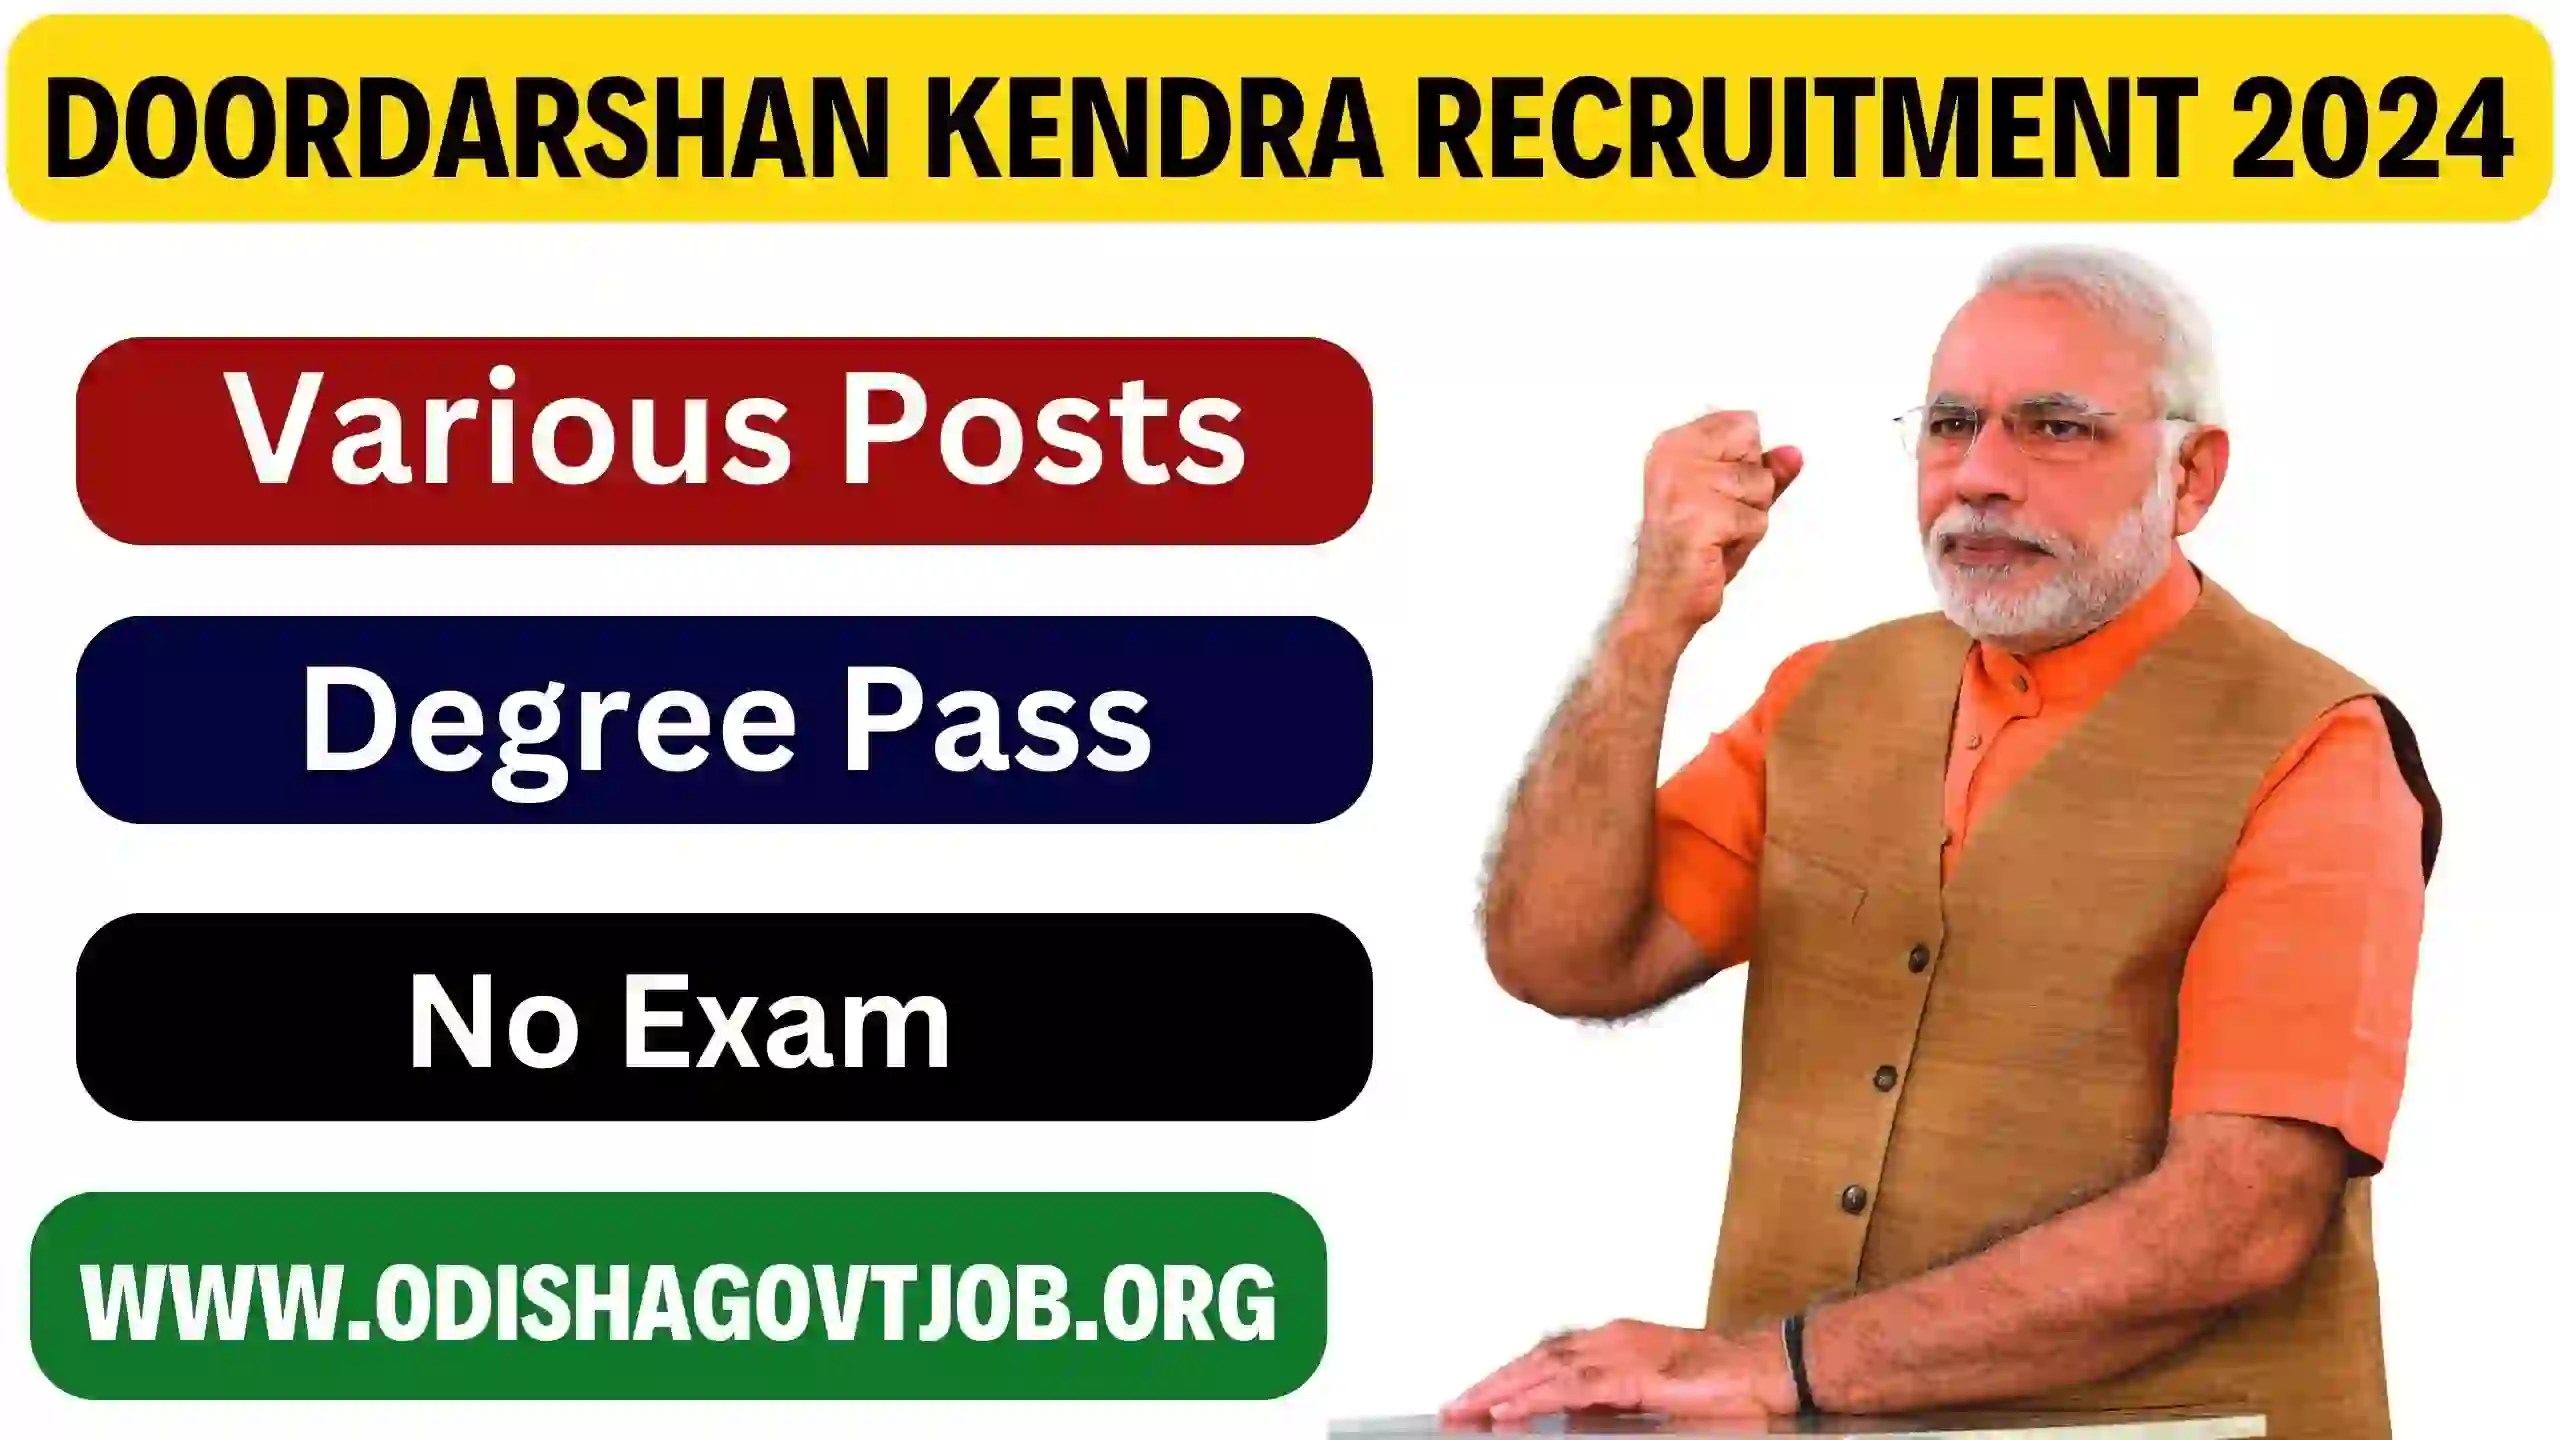 Bhubaneswar Doordarshan Kendra Recruitment 2024